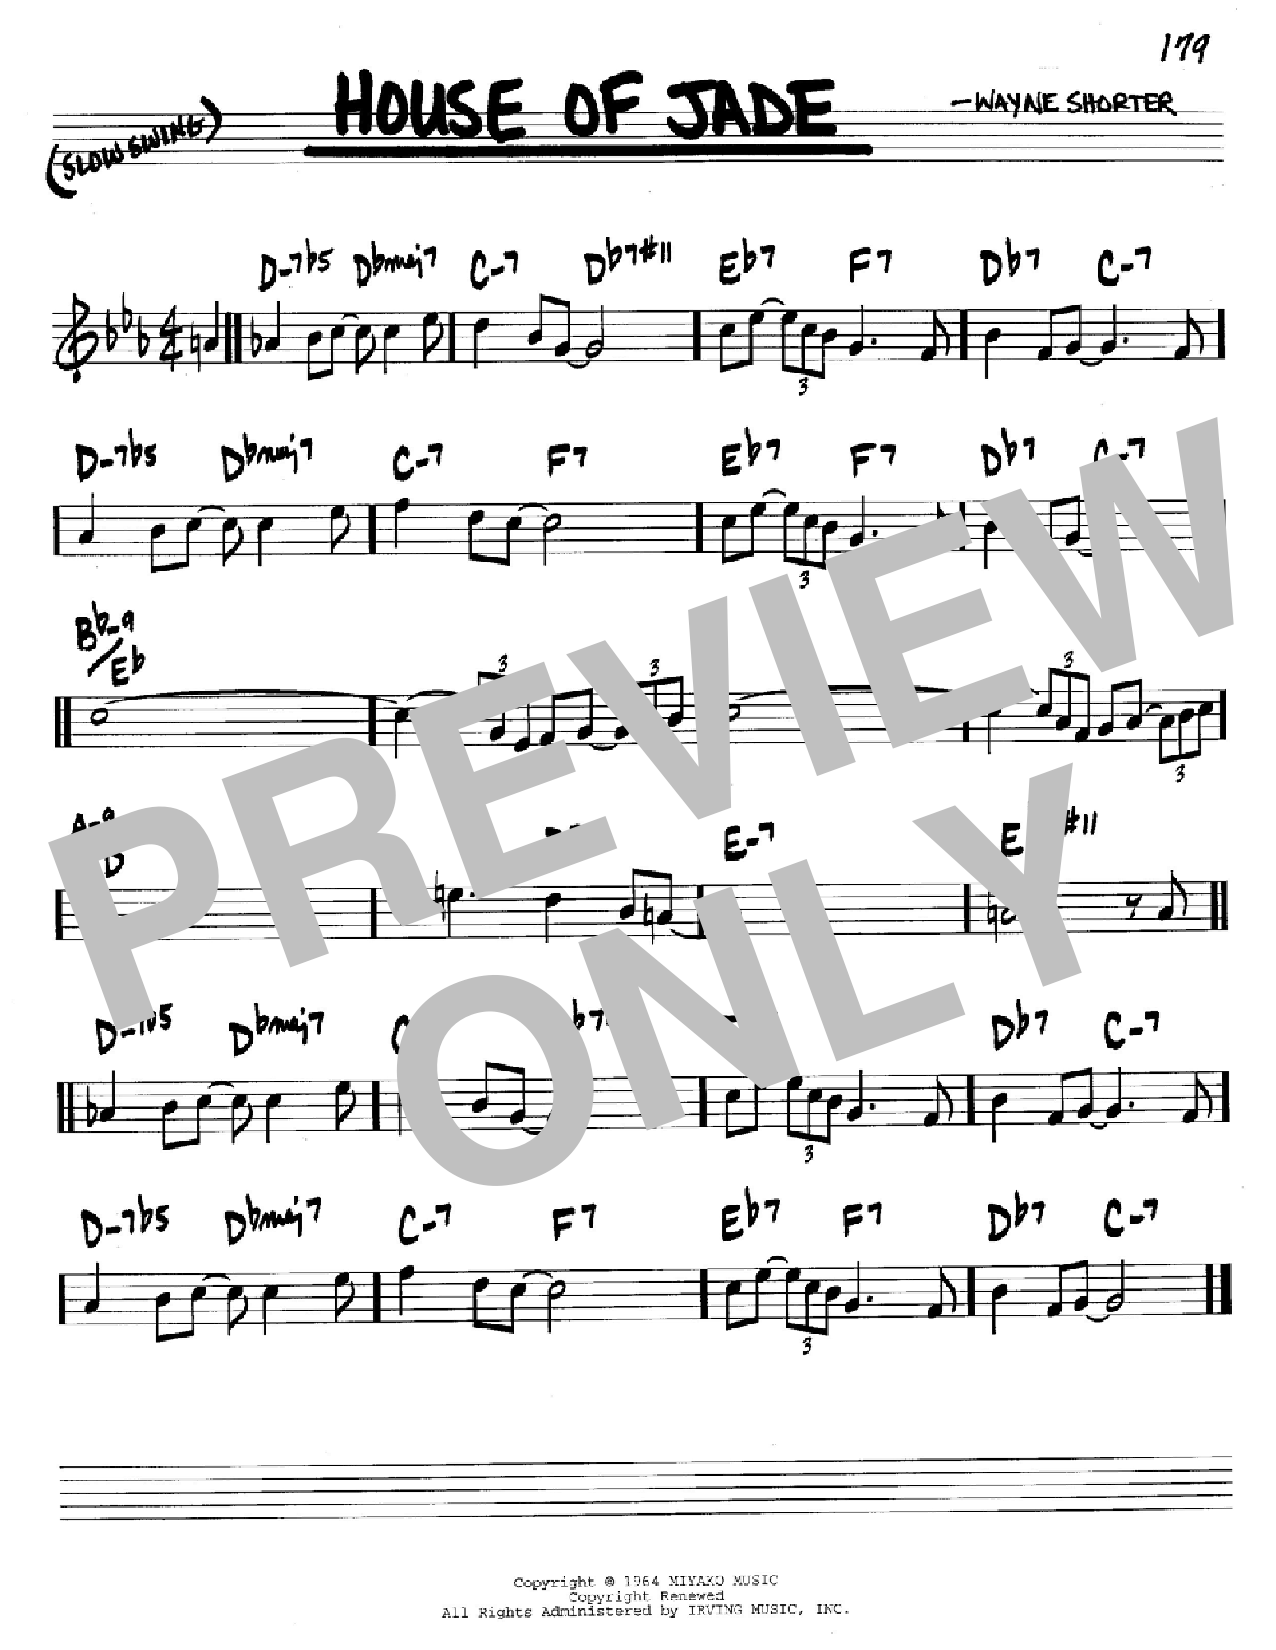 Wayne Shorter House Of Jade Sheet Music Notes & Chords for Real Book - Melody & Chords - Bb Instruments - Download or Print PDF